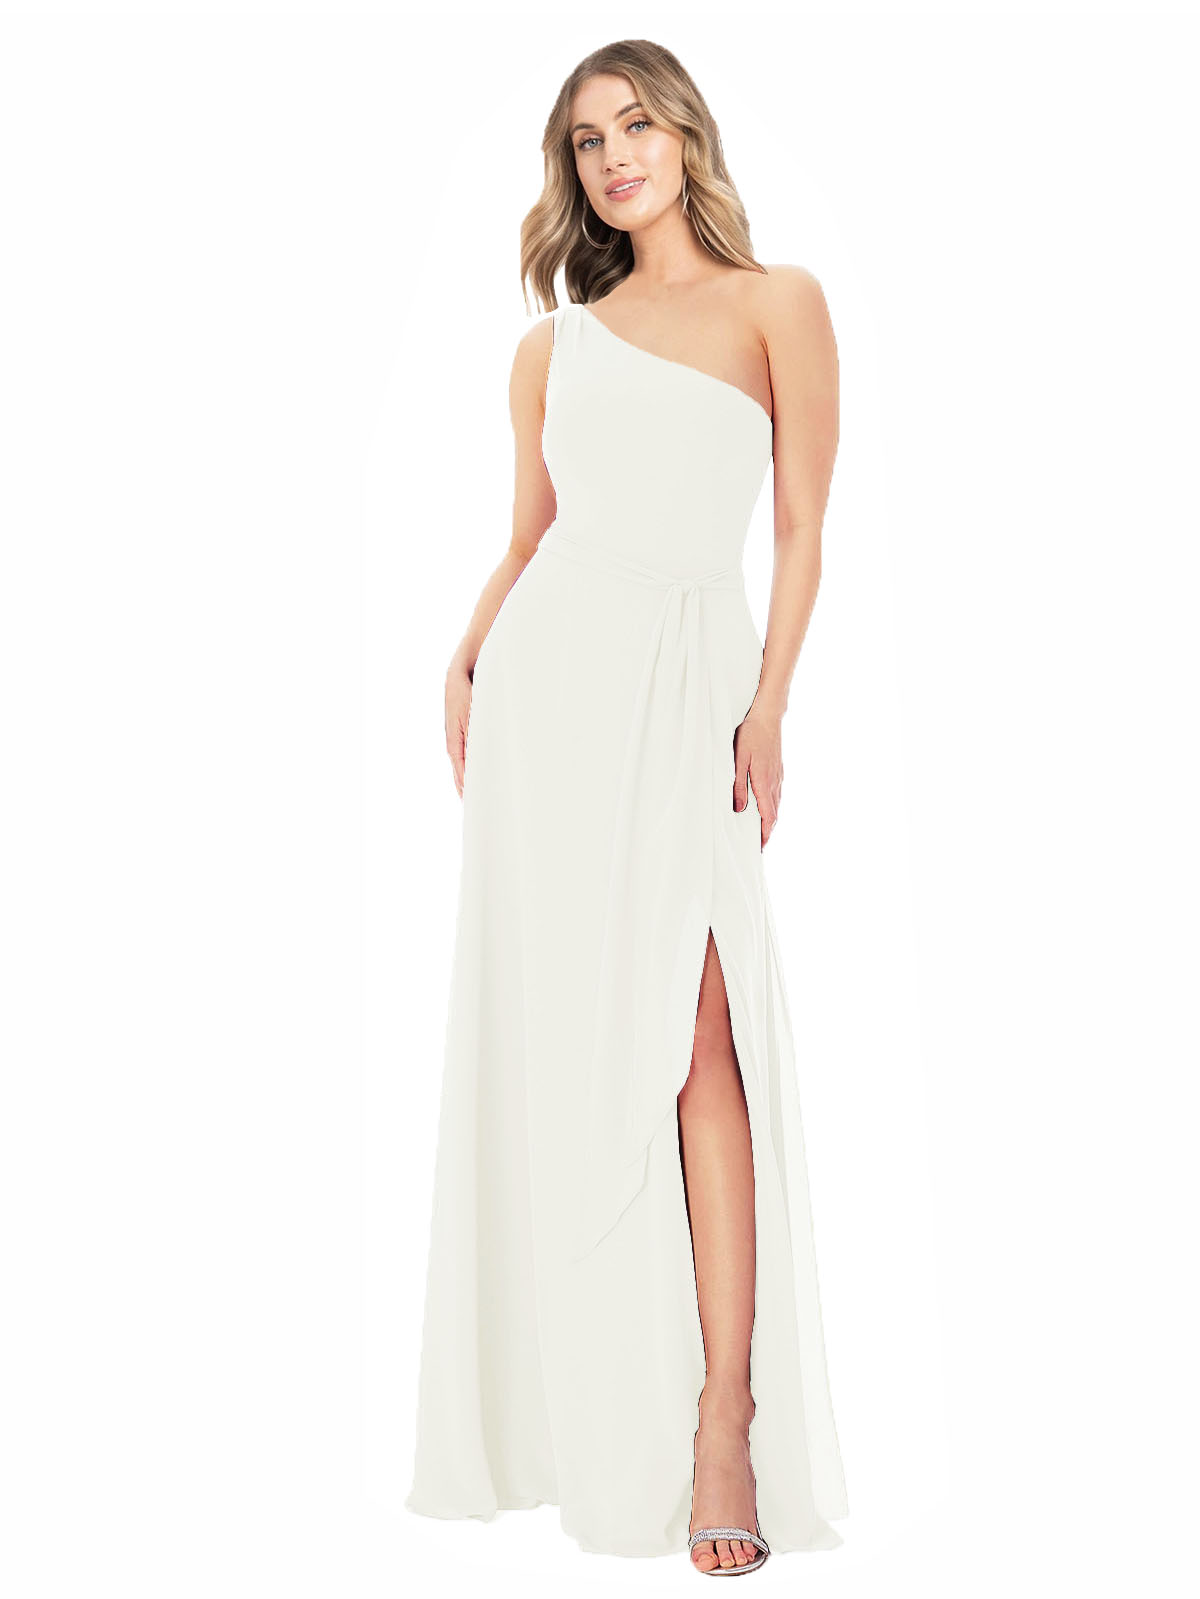 Ivory A-Line One Shoulder Sleeveless Long Bridesmaid Dress Doris